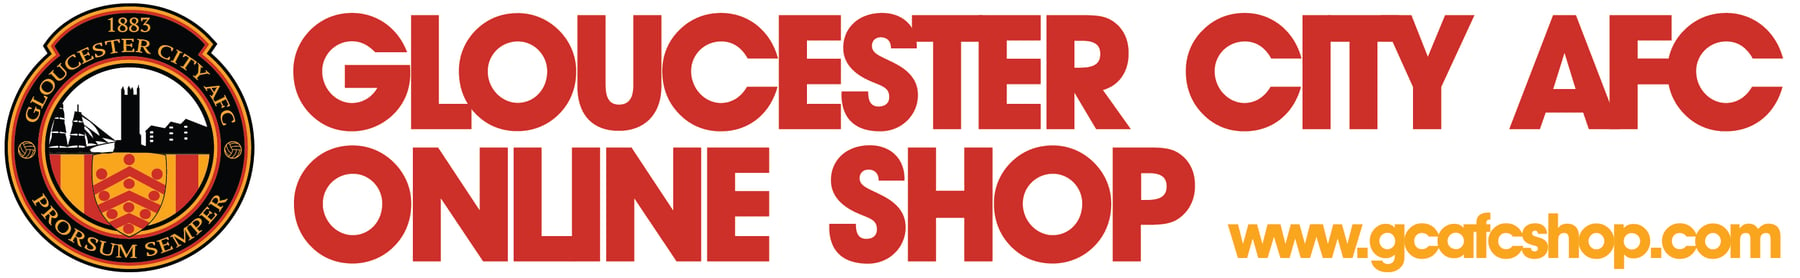 Gloucester City AFC Online Shop Home